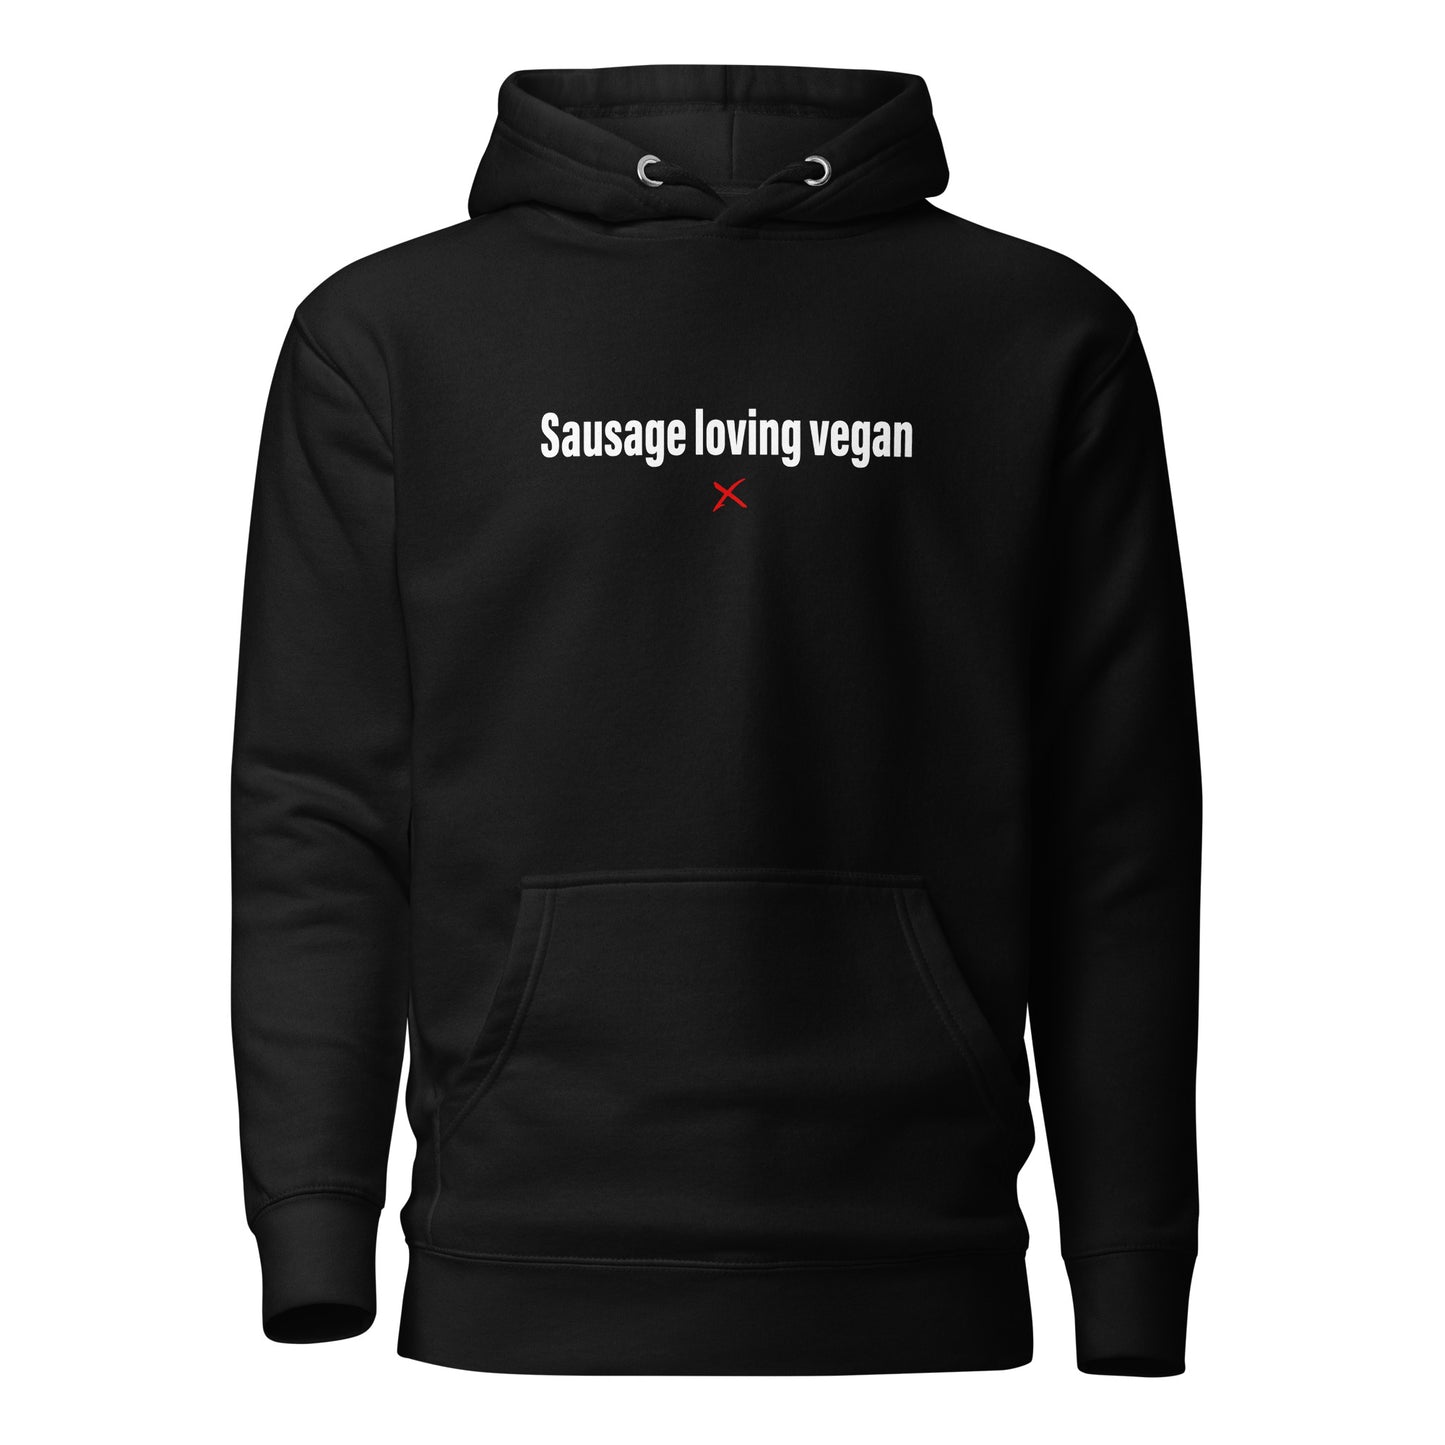 Sausage loving vegan - Hoodie